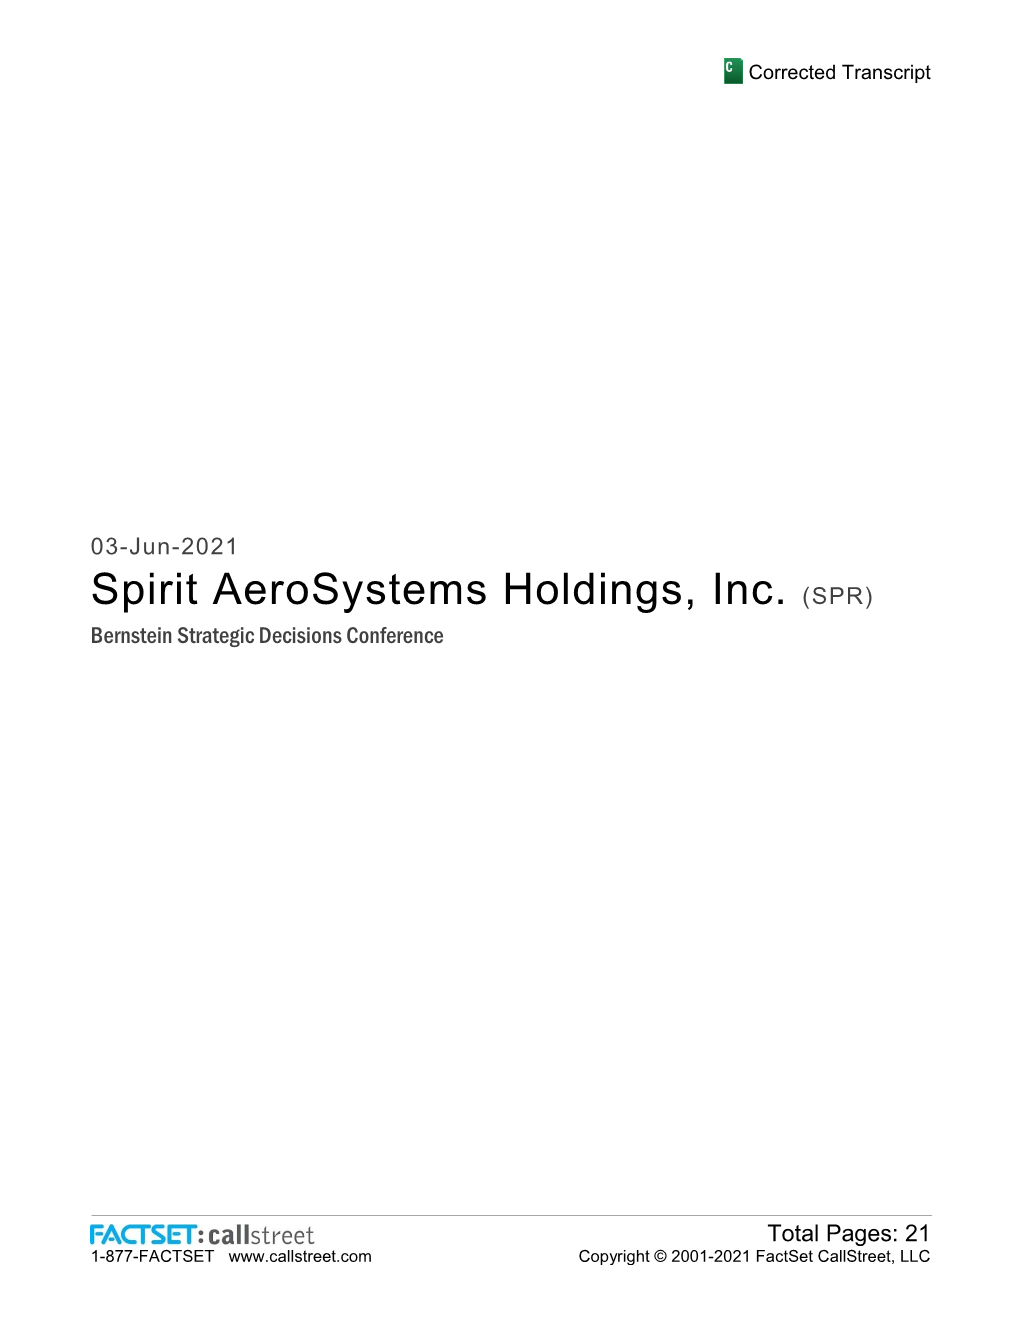 Spirit Aerosystems Holdings, Inc. (SPR) Bernstein Strategic Decisions Conference